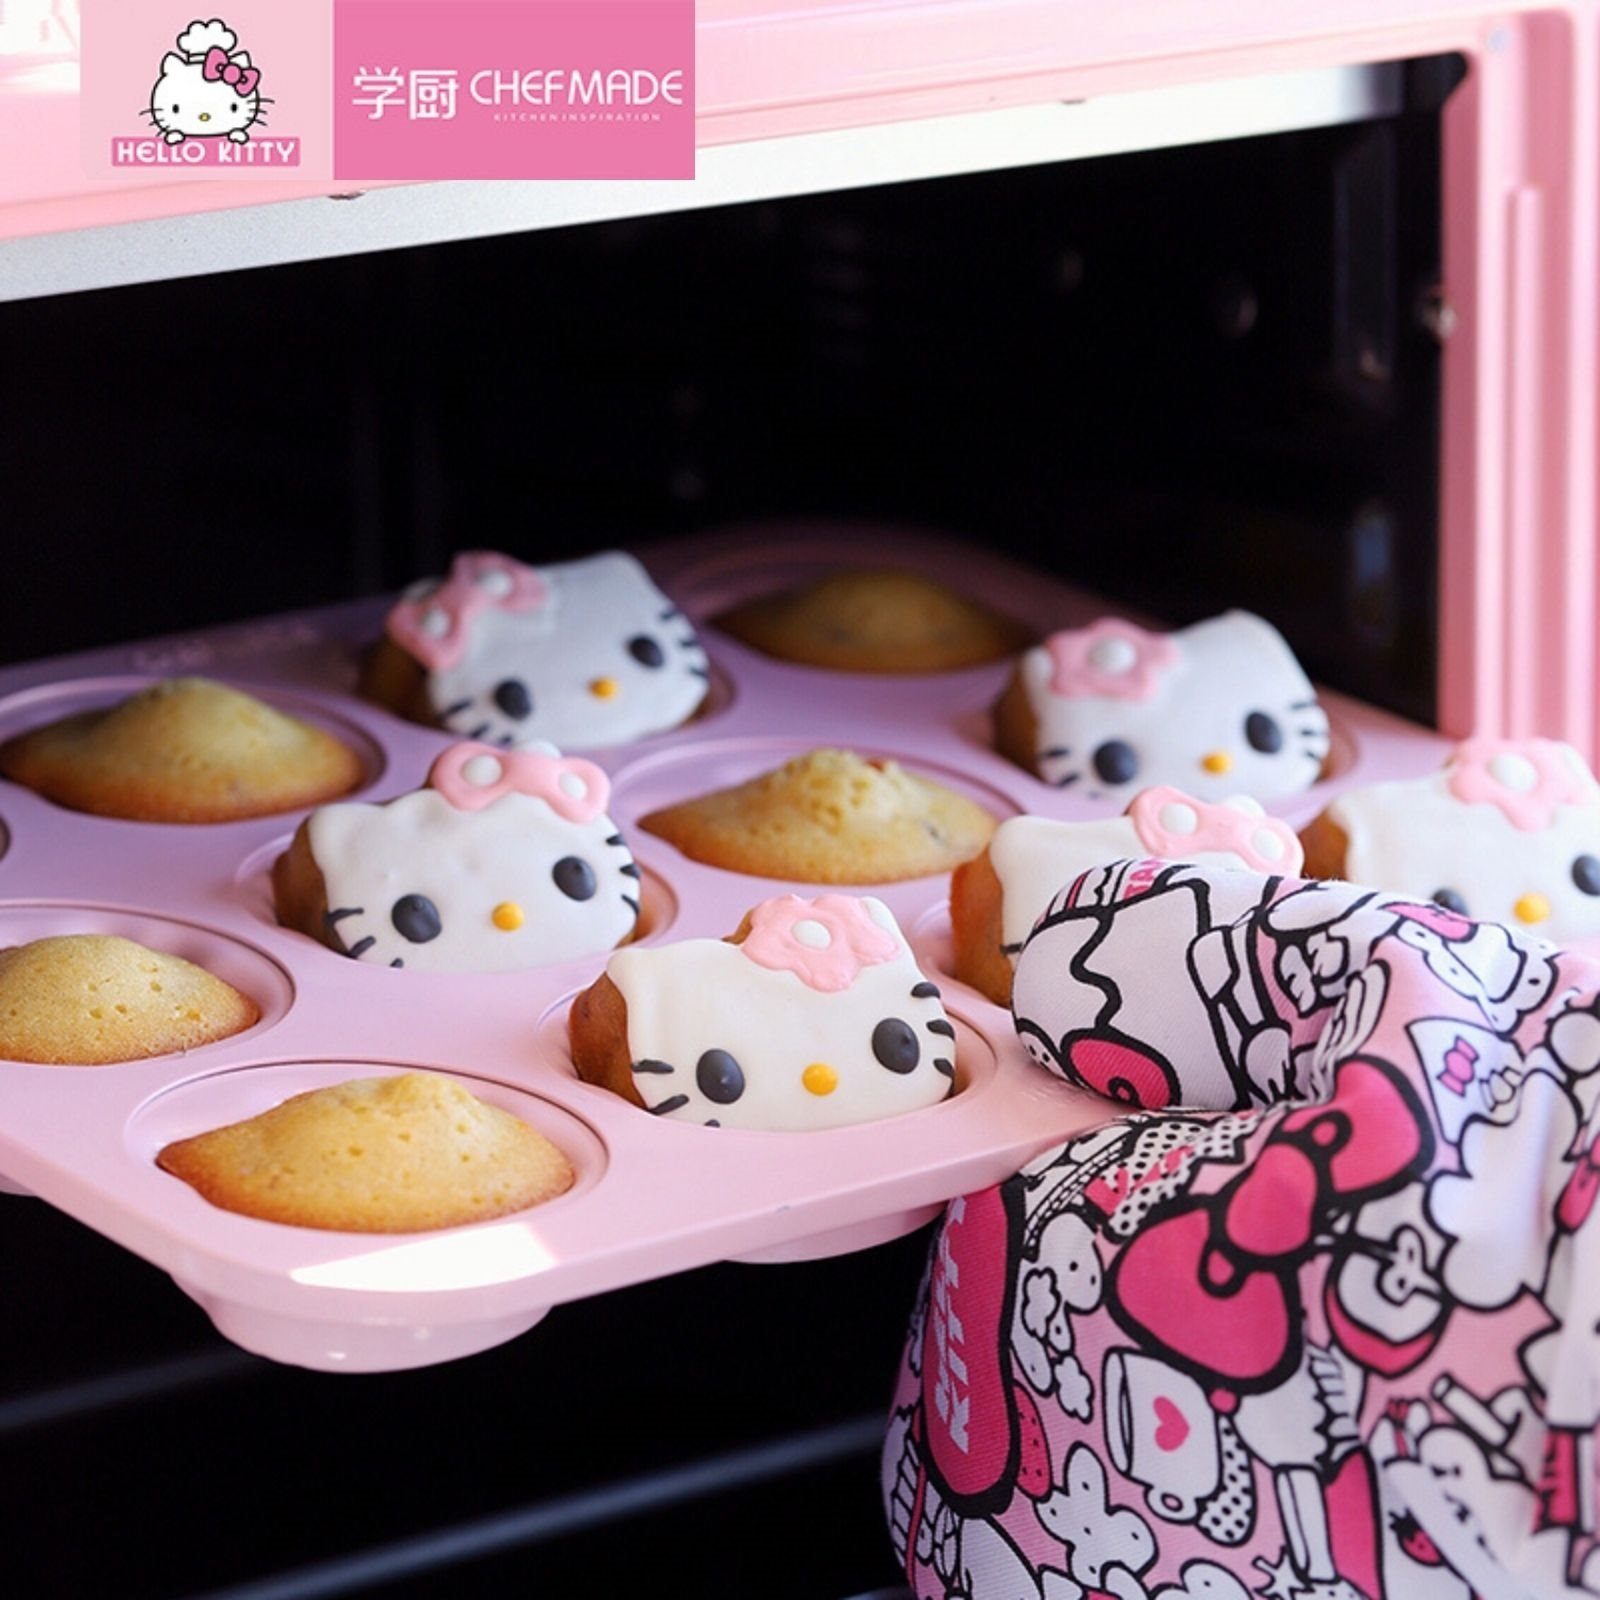 Chefmade Muffinform & Pink, Muffinform KITTY, 12er Minikuchenform, Muffin 1-tlg), HELLO Muffins silikonbeschichtet, Muffinblech, Backform Cup-Cakes, Backblech, antihaft- Kohlenstoffstahl Muffinform, Cupcakeblech, Silikon - Muffinblech, 12 326x258x28mm, (CHEFMADE,